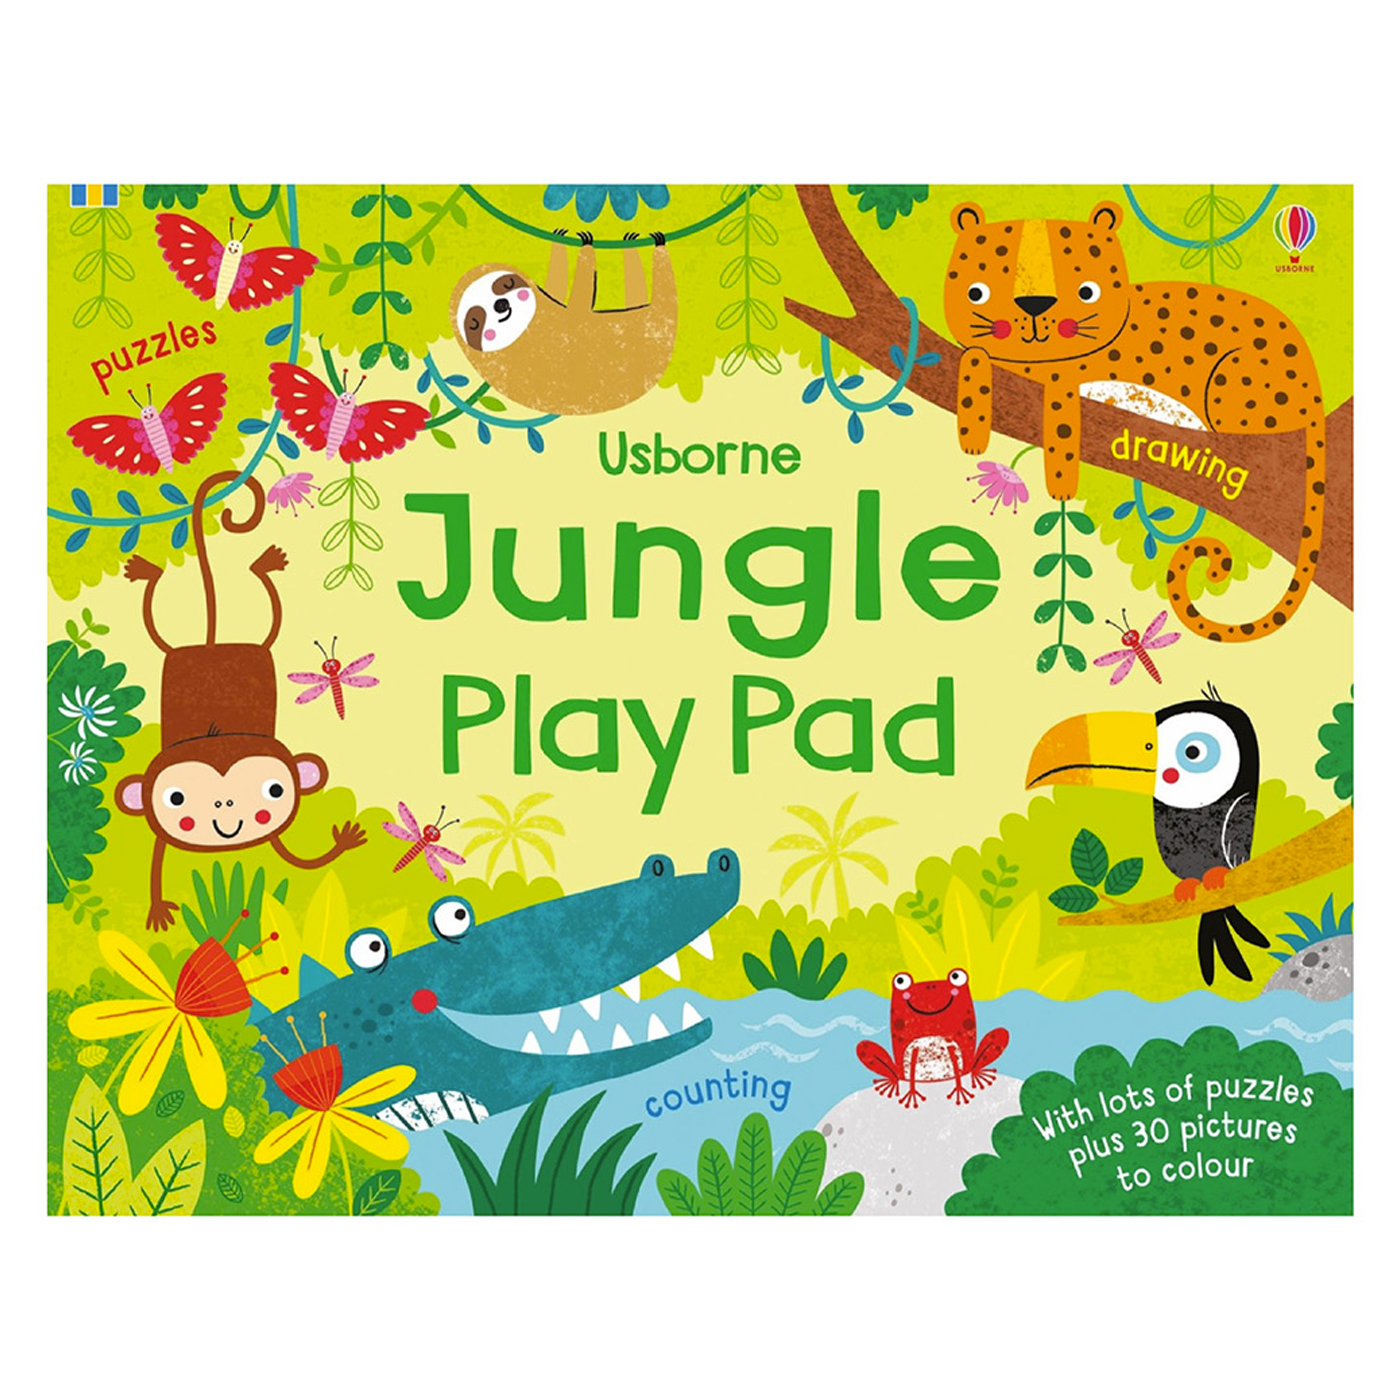  Jungle Play Pad